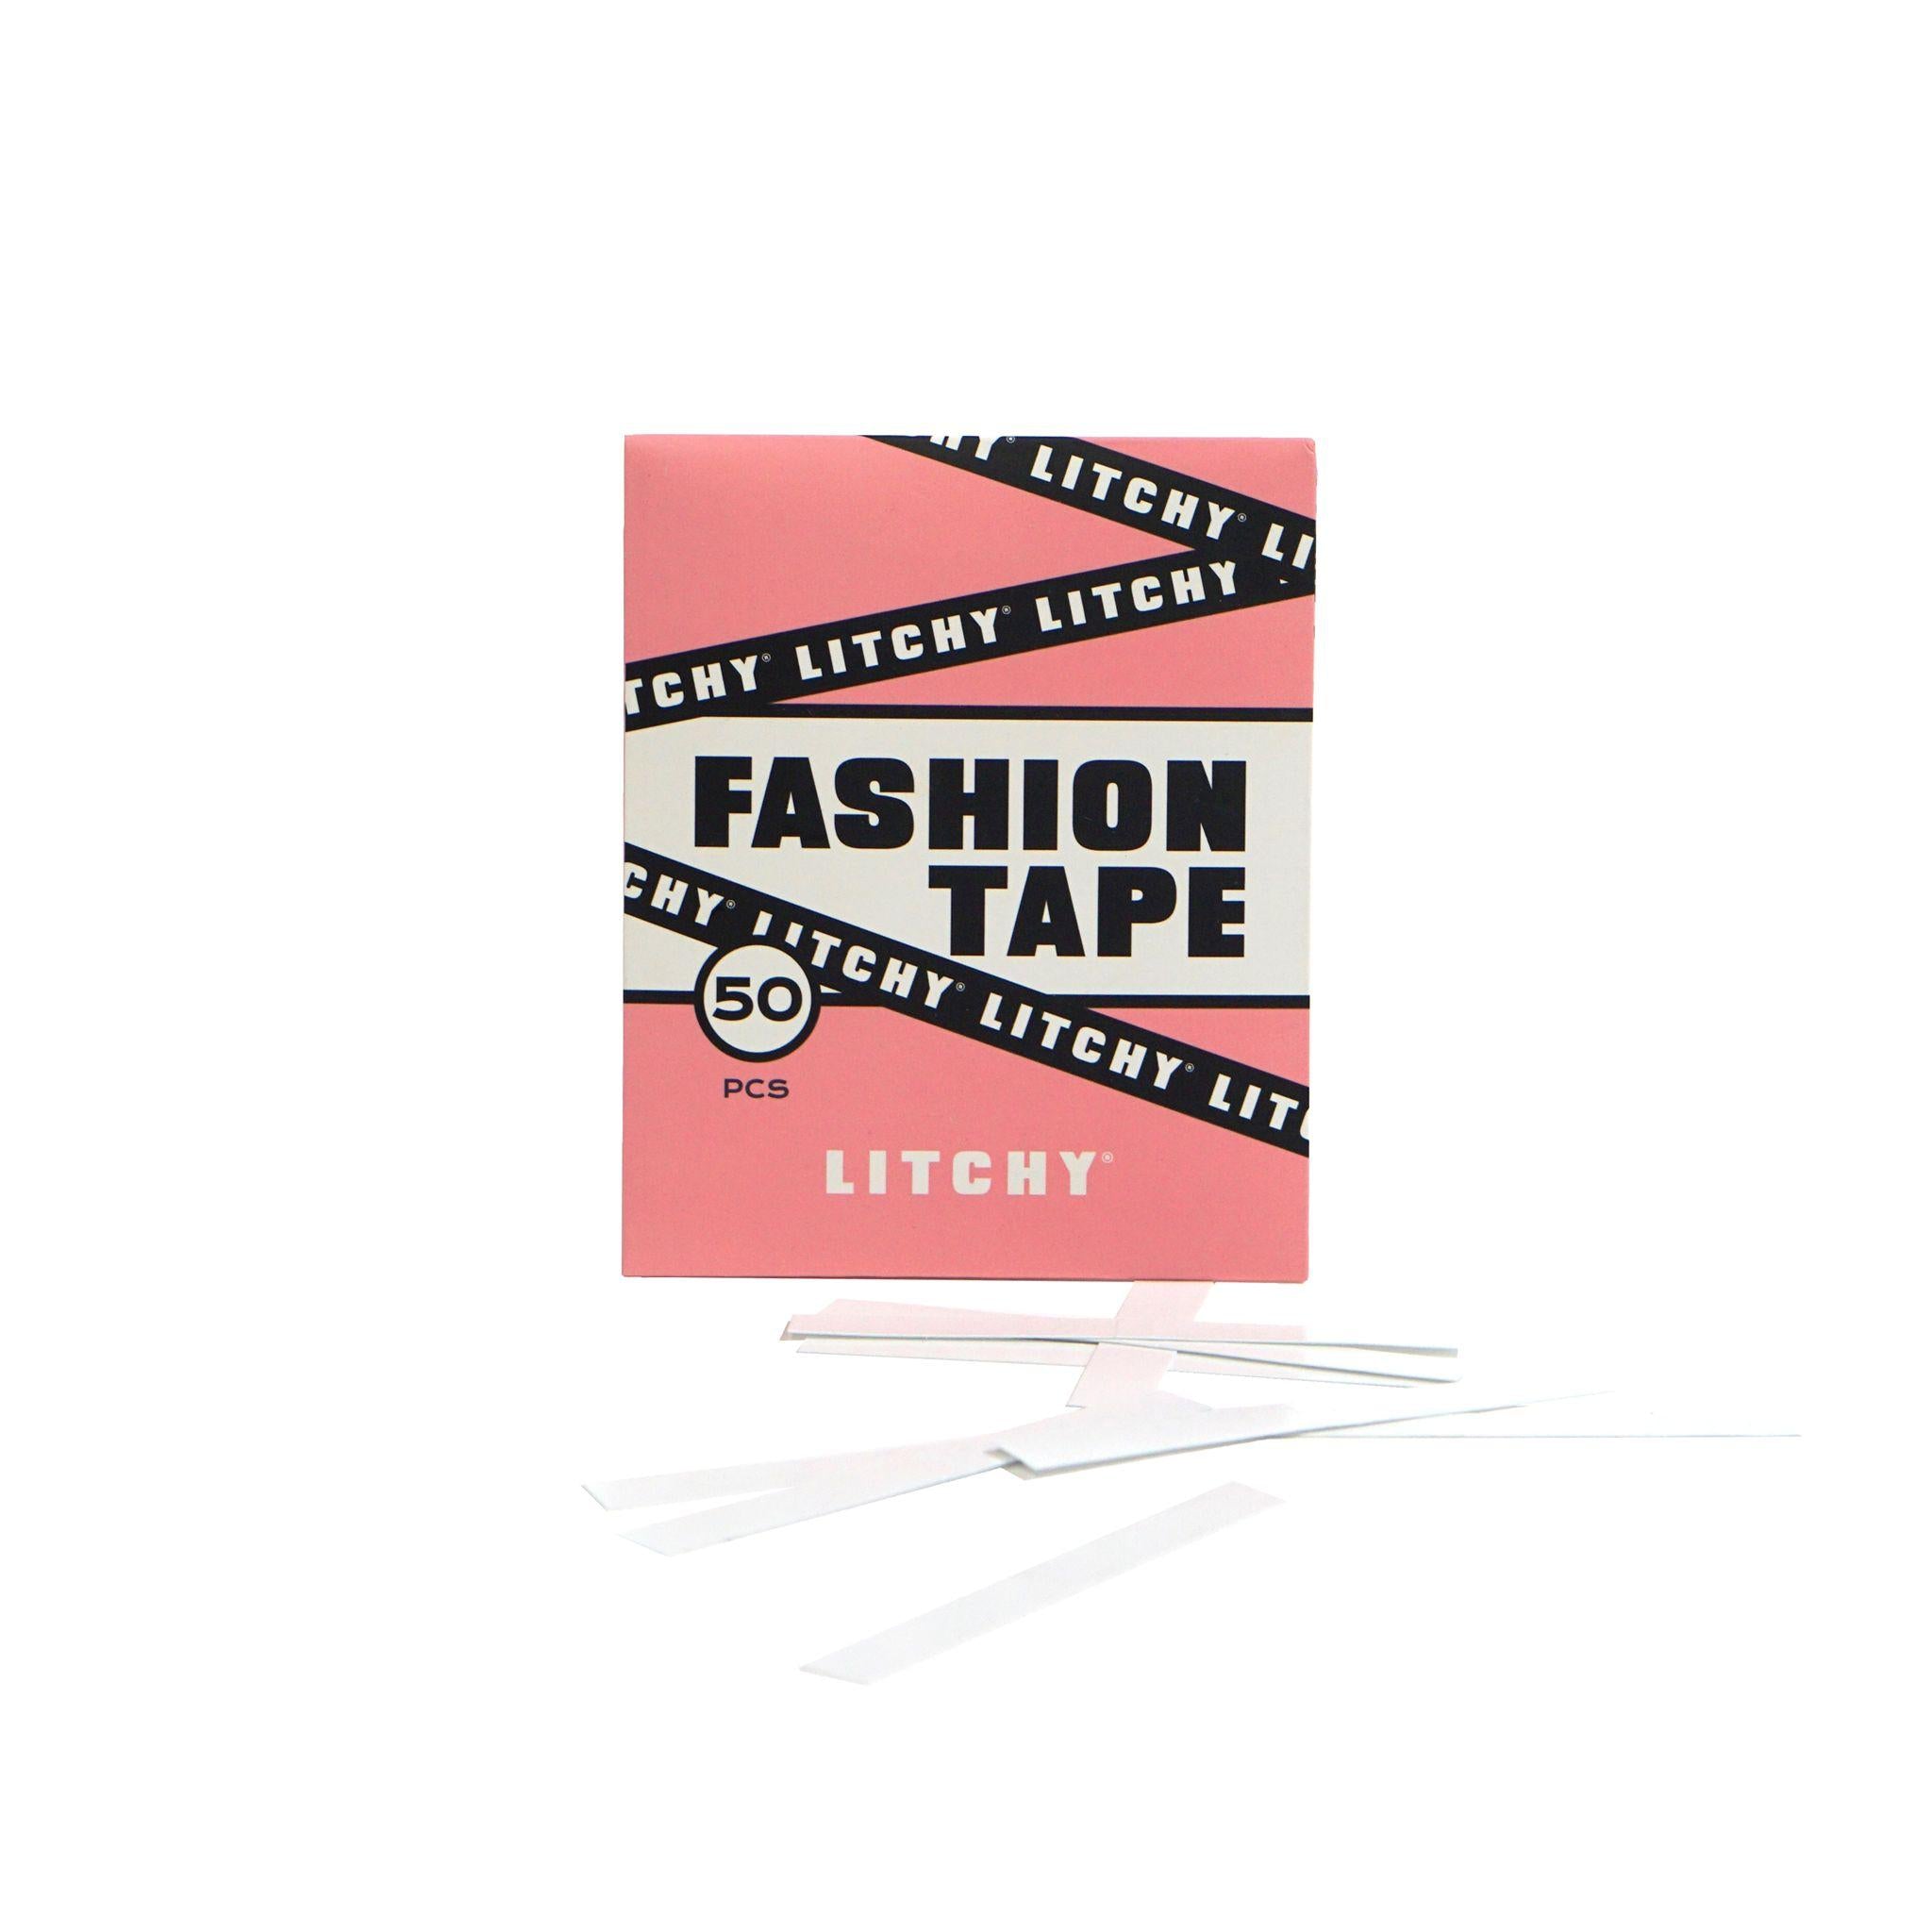 litchy-fashiontape.jpg